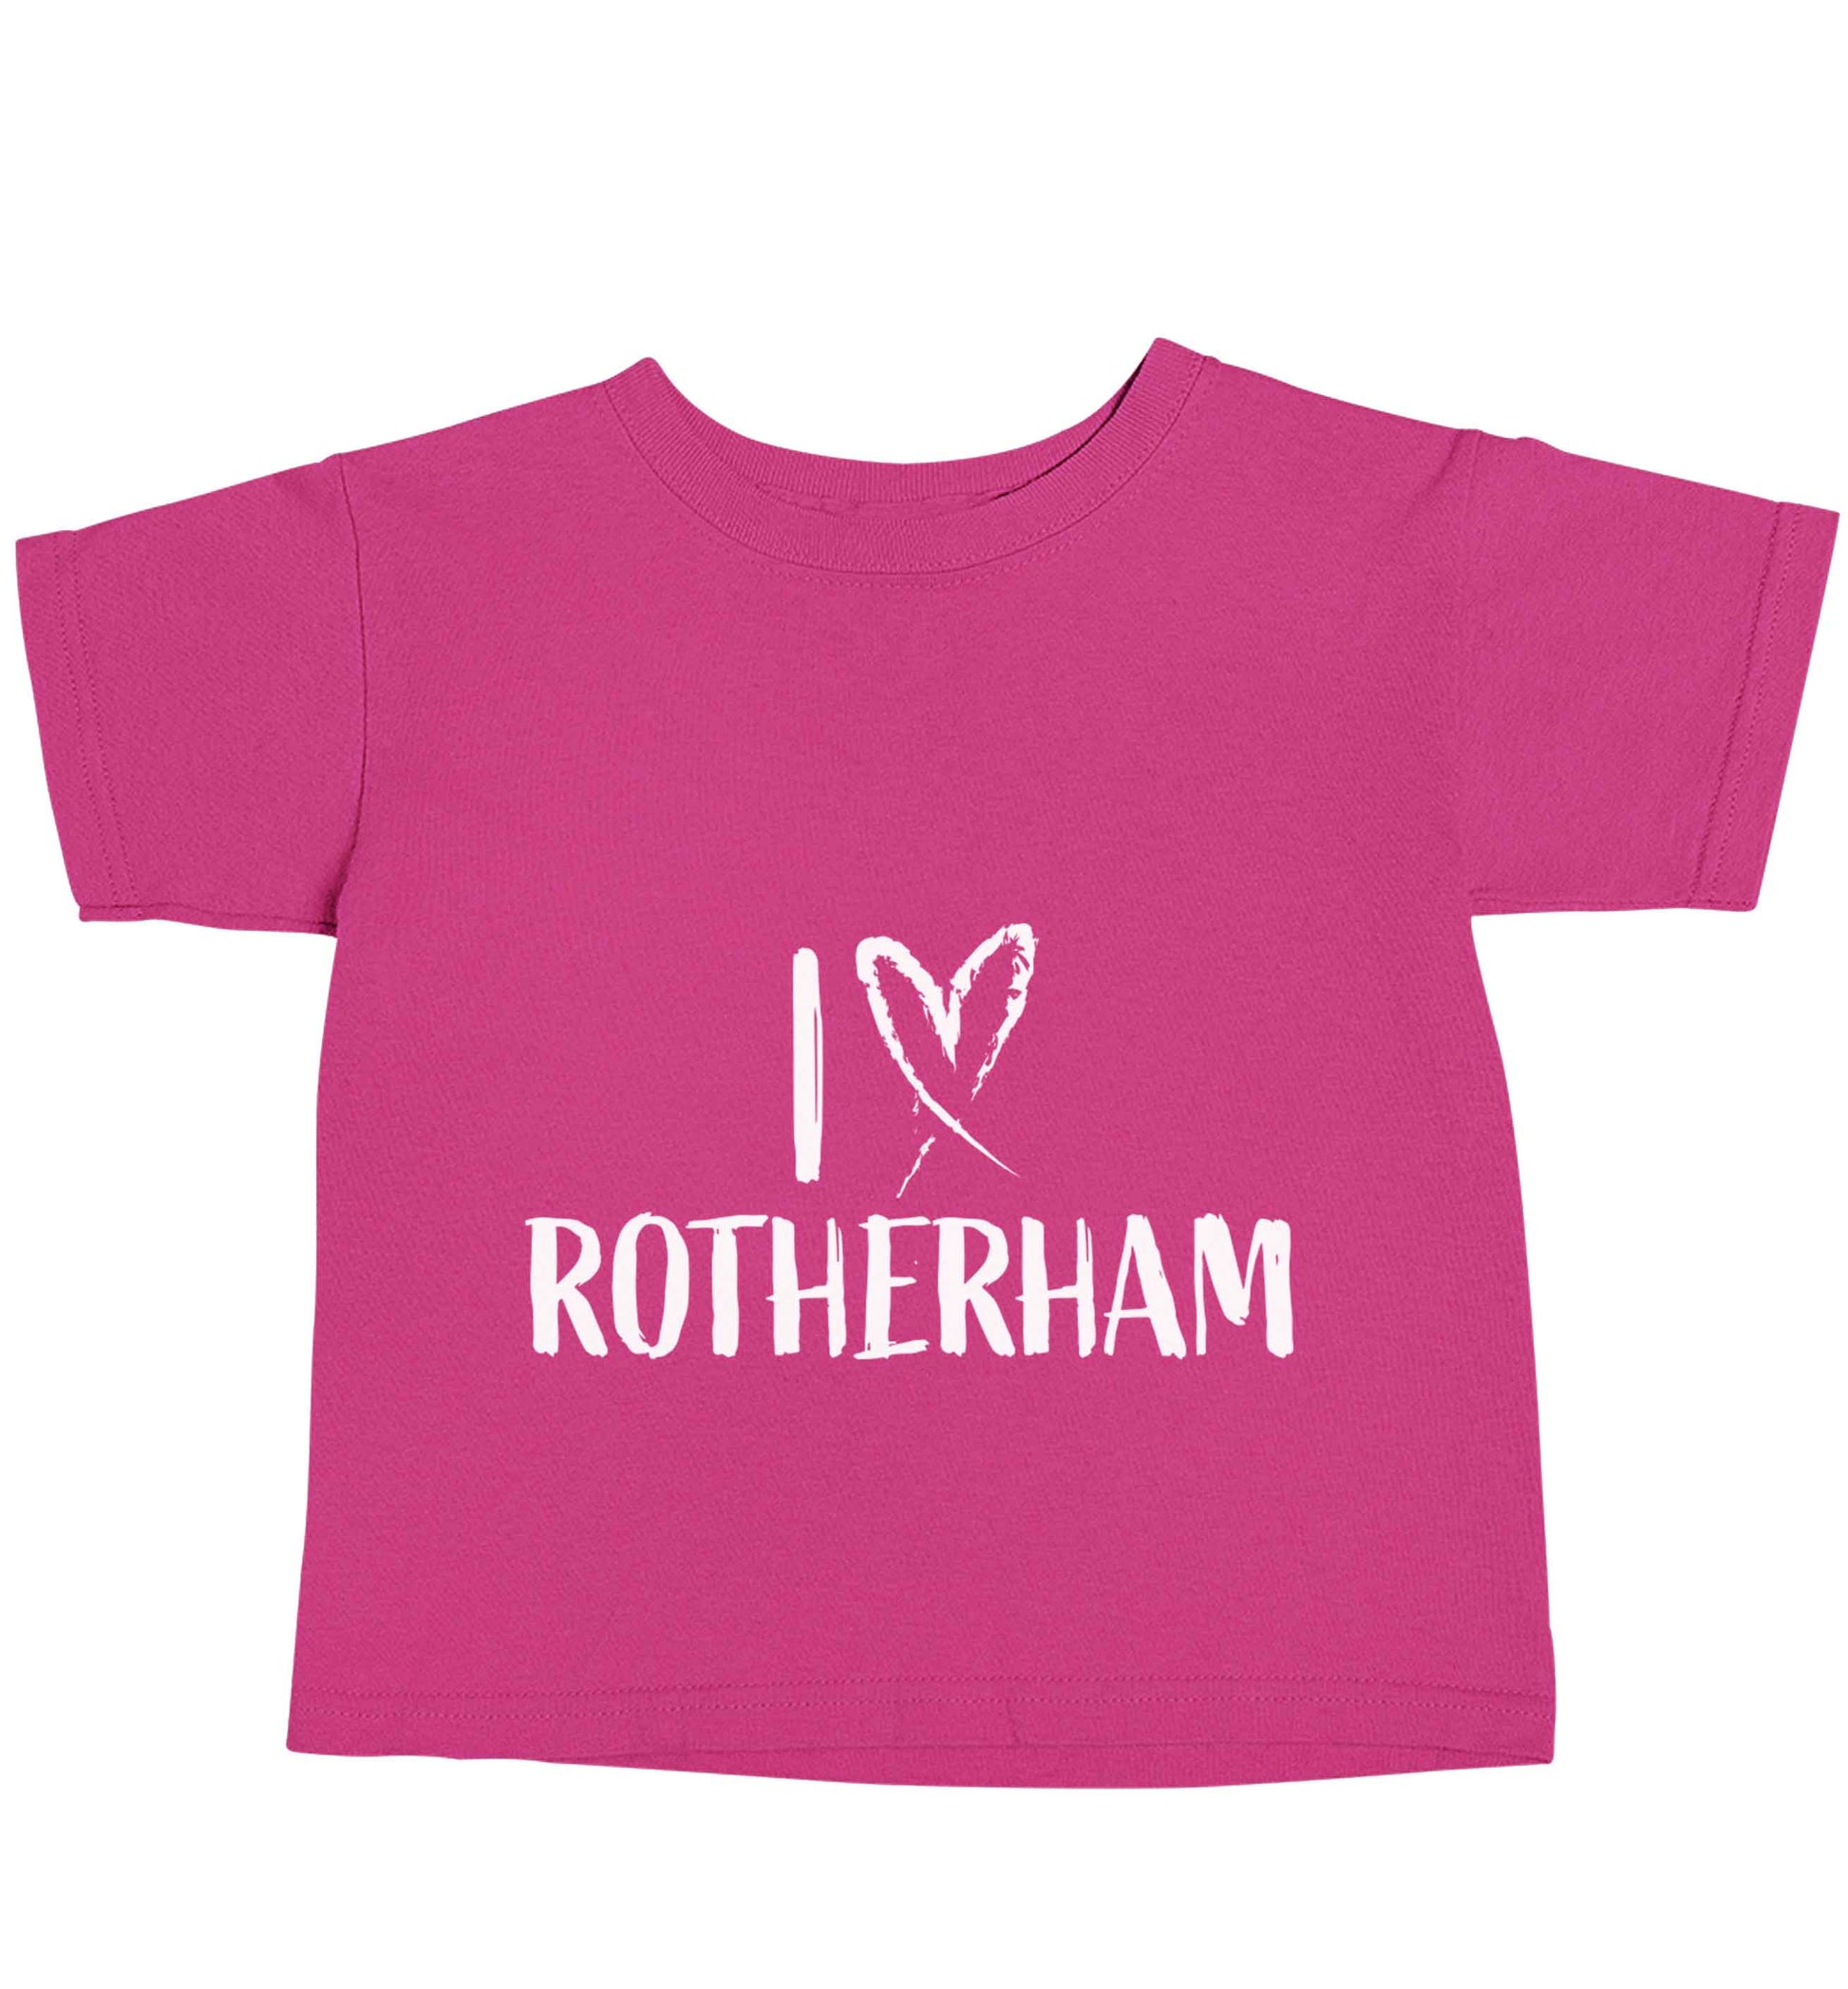 I love Rotherham pink baby toddler Tshirt 2 Years